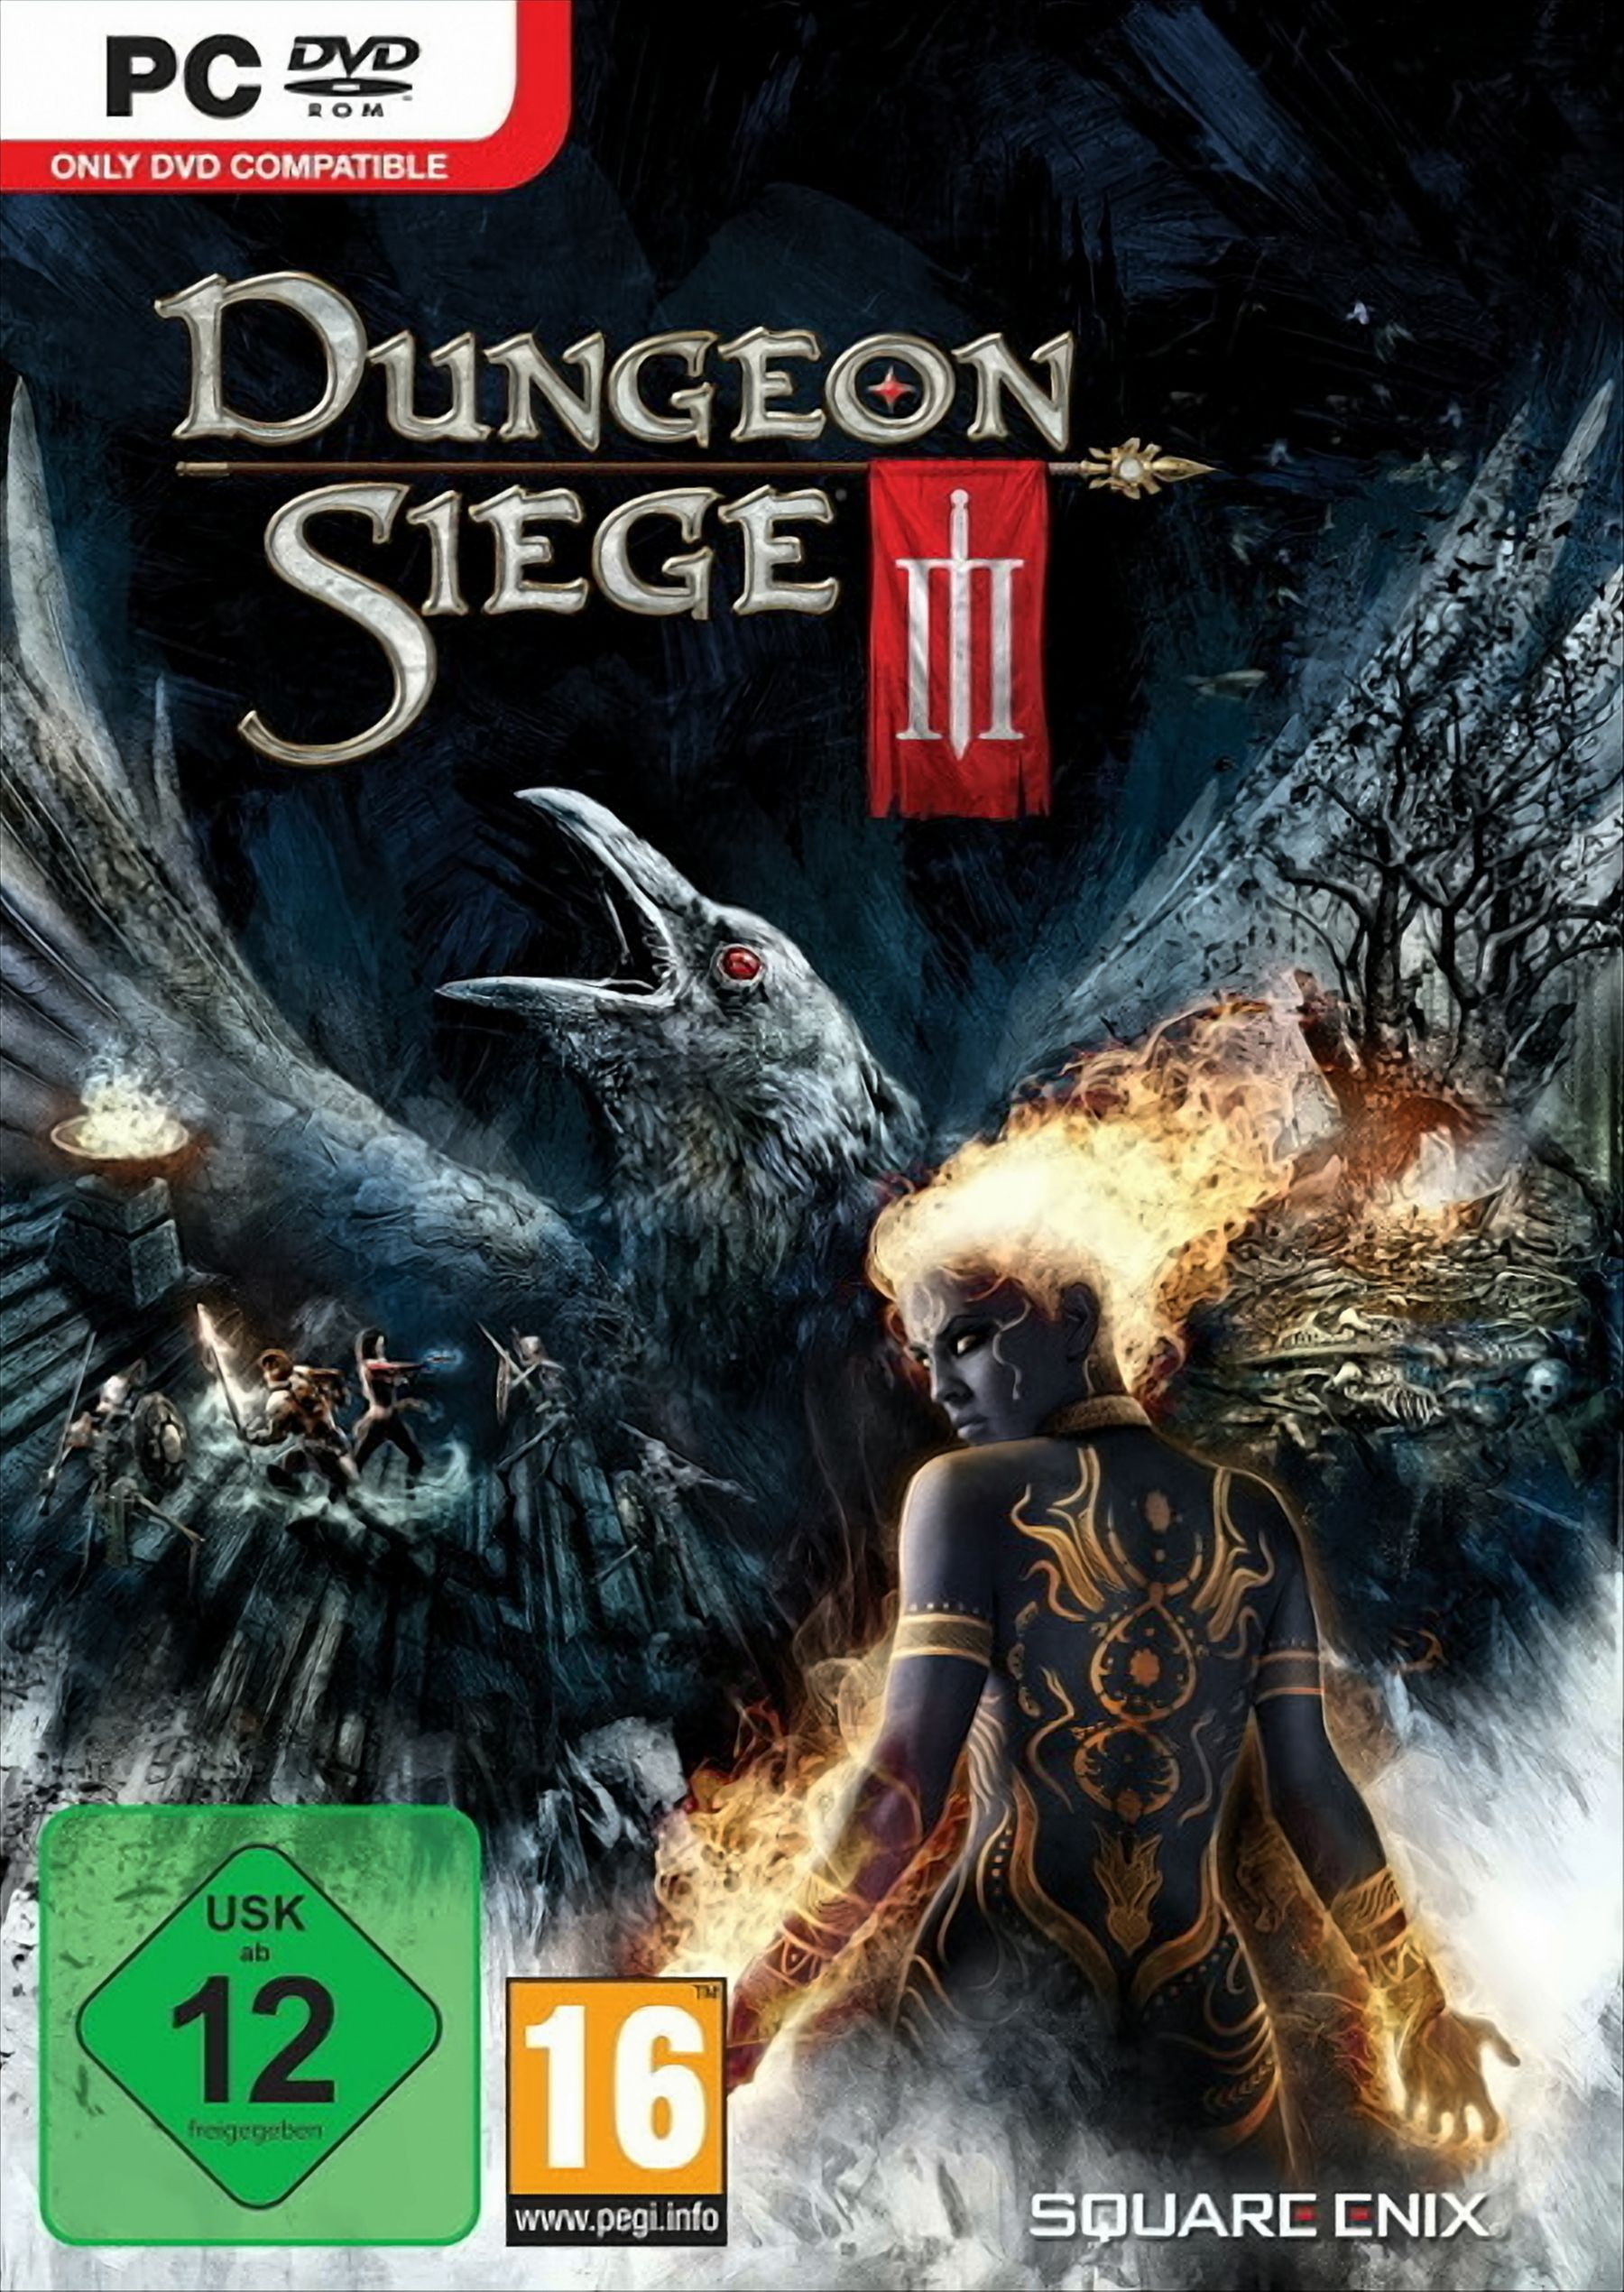 Dungeon Siege III Limited - - [PC] Edition